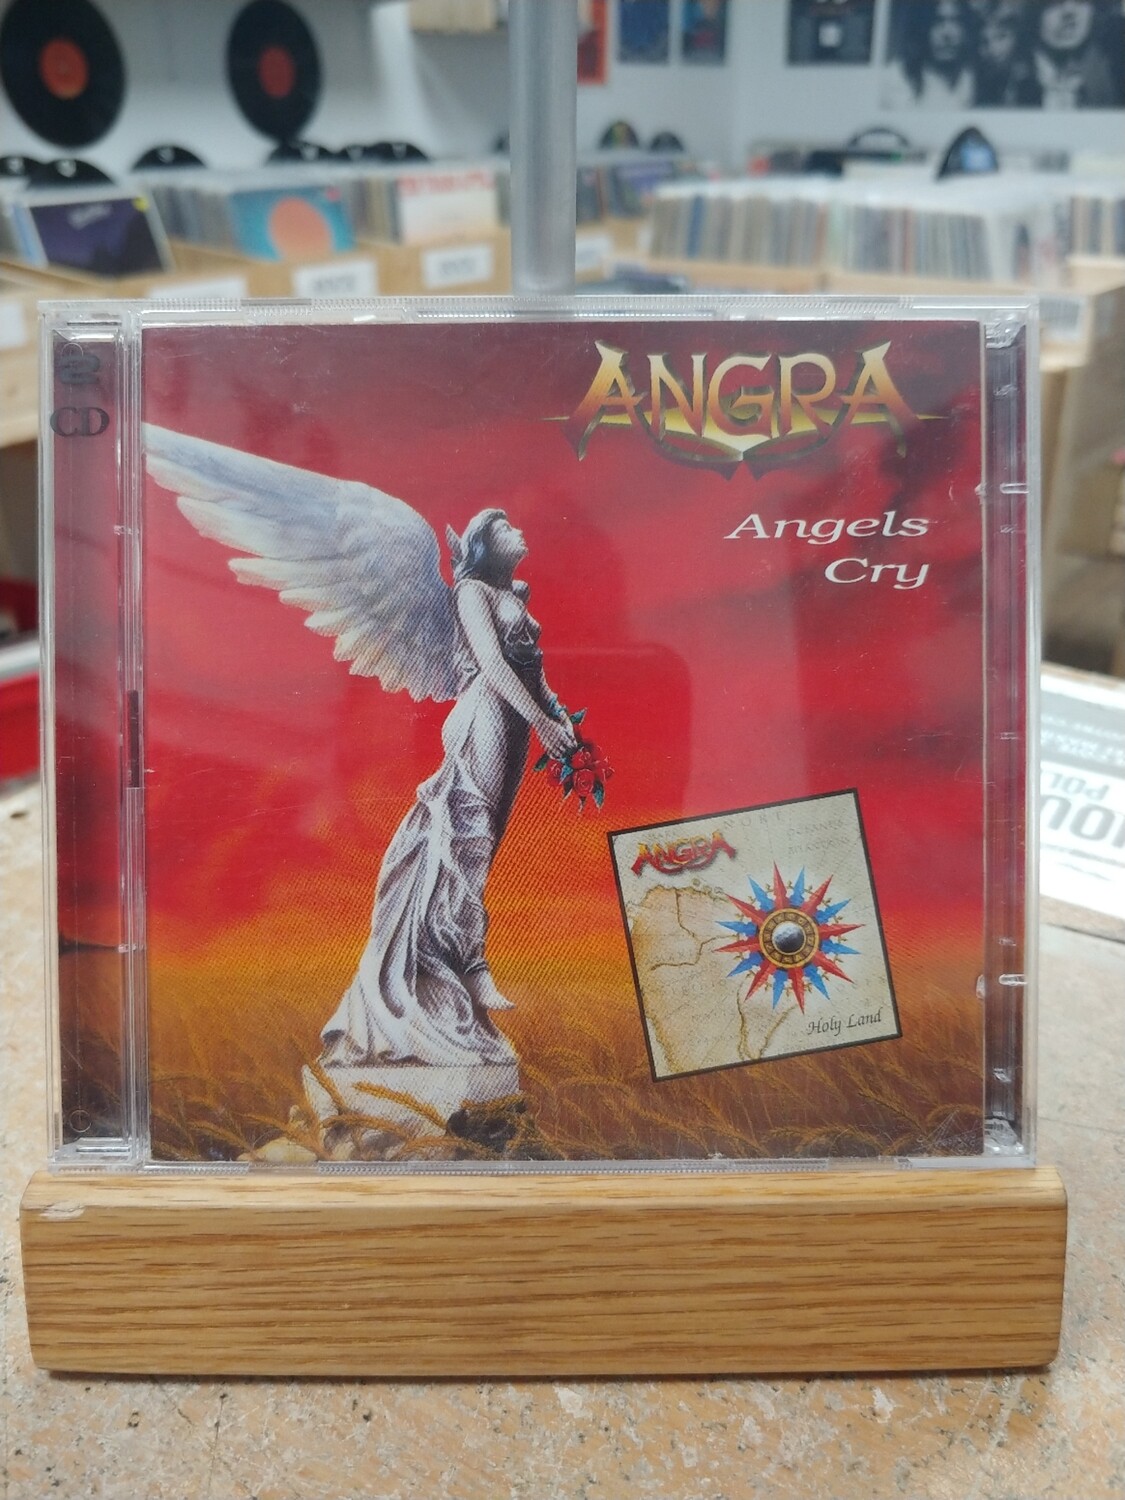 Angra - Angels Cry (CD)